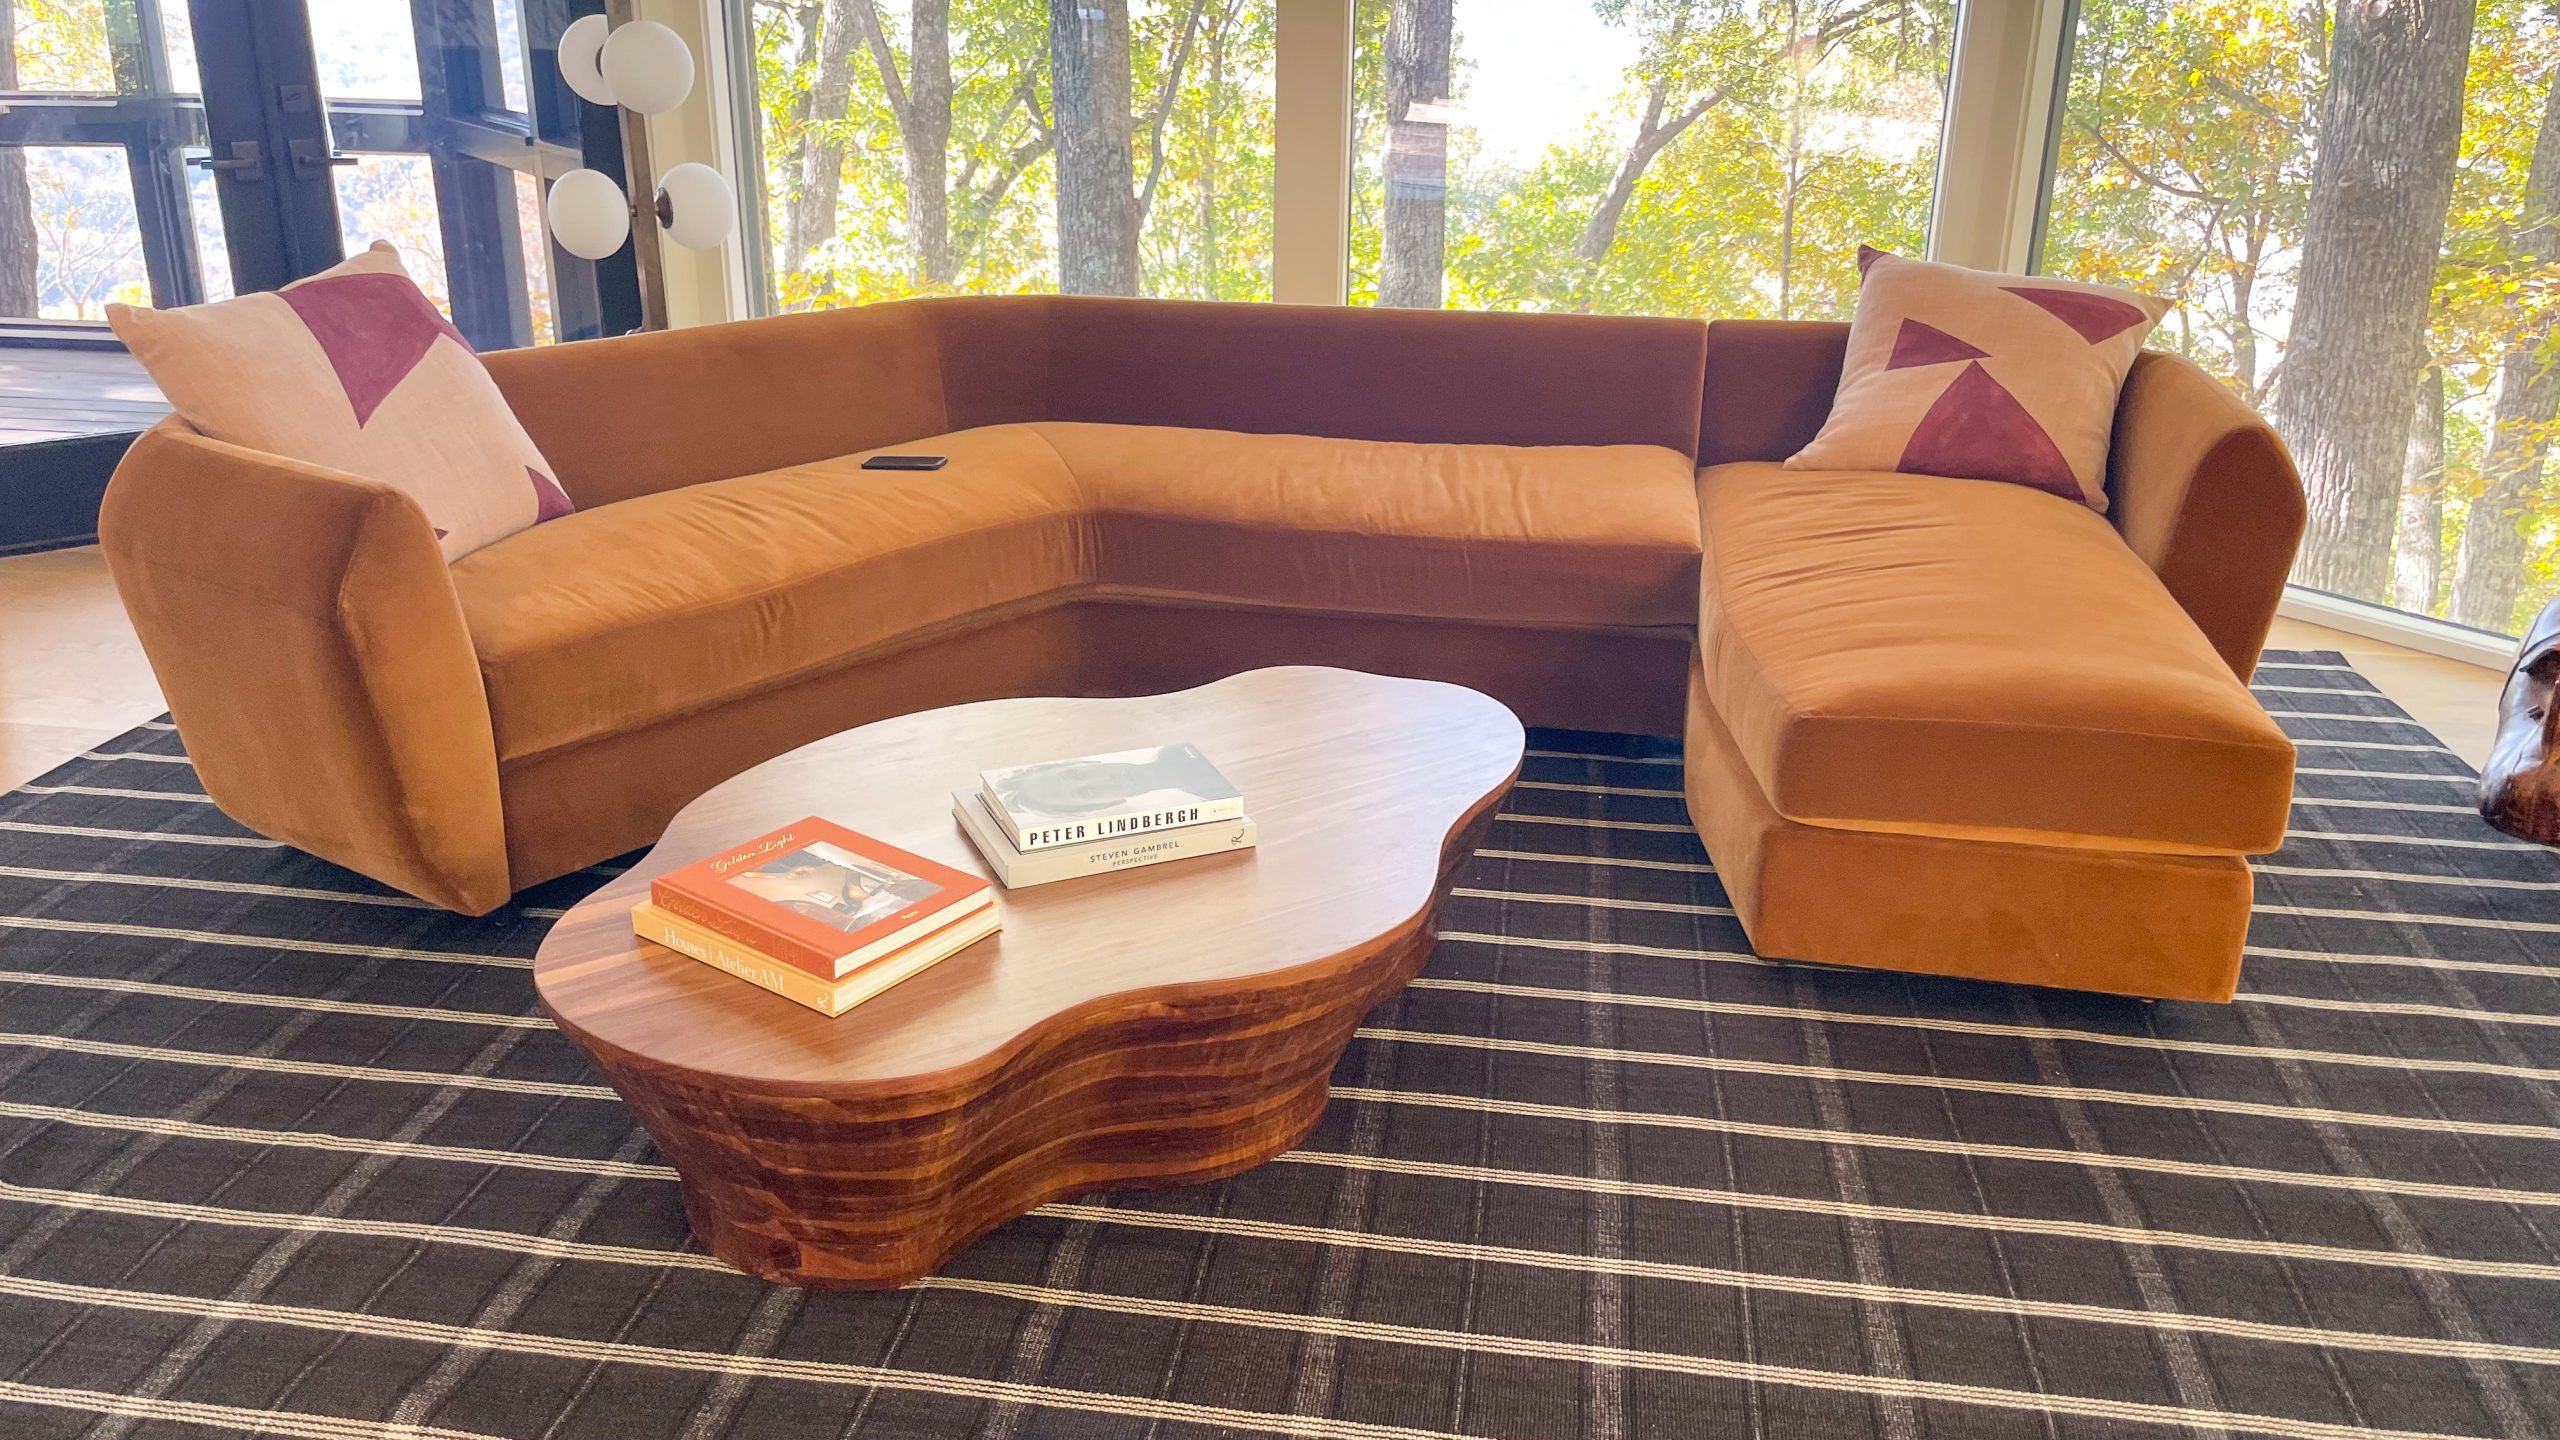 Organic shaped walnut coffee table in living room